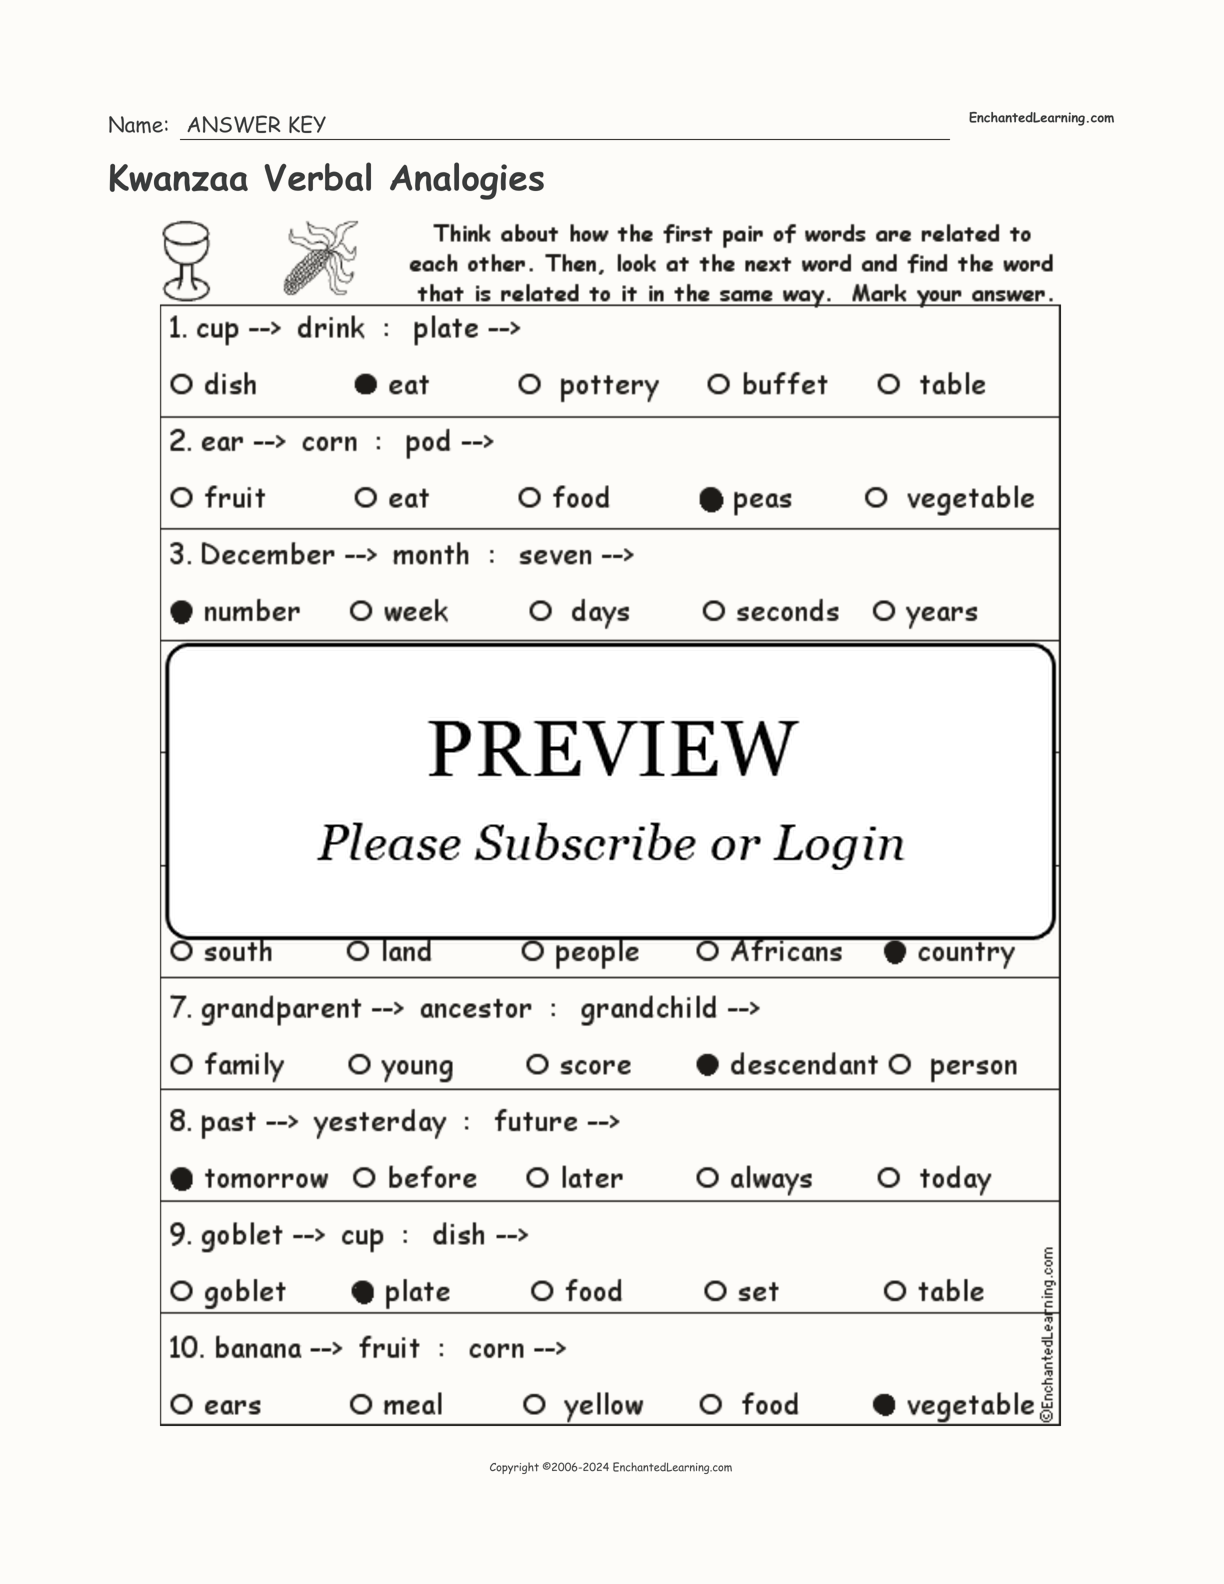 Kwanzaa Verbal Analogies interactive worksheet page 2